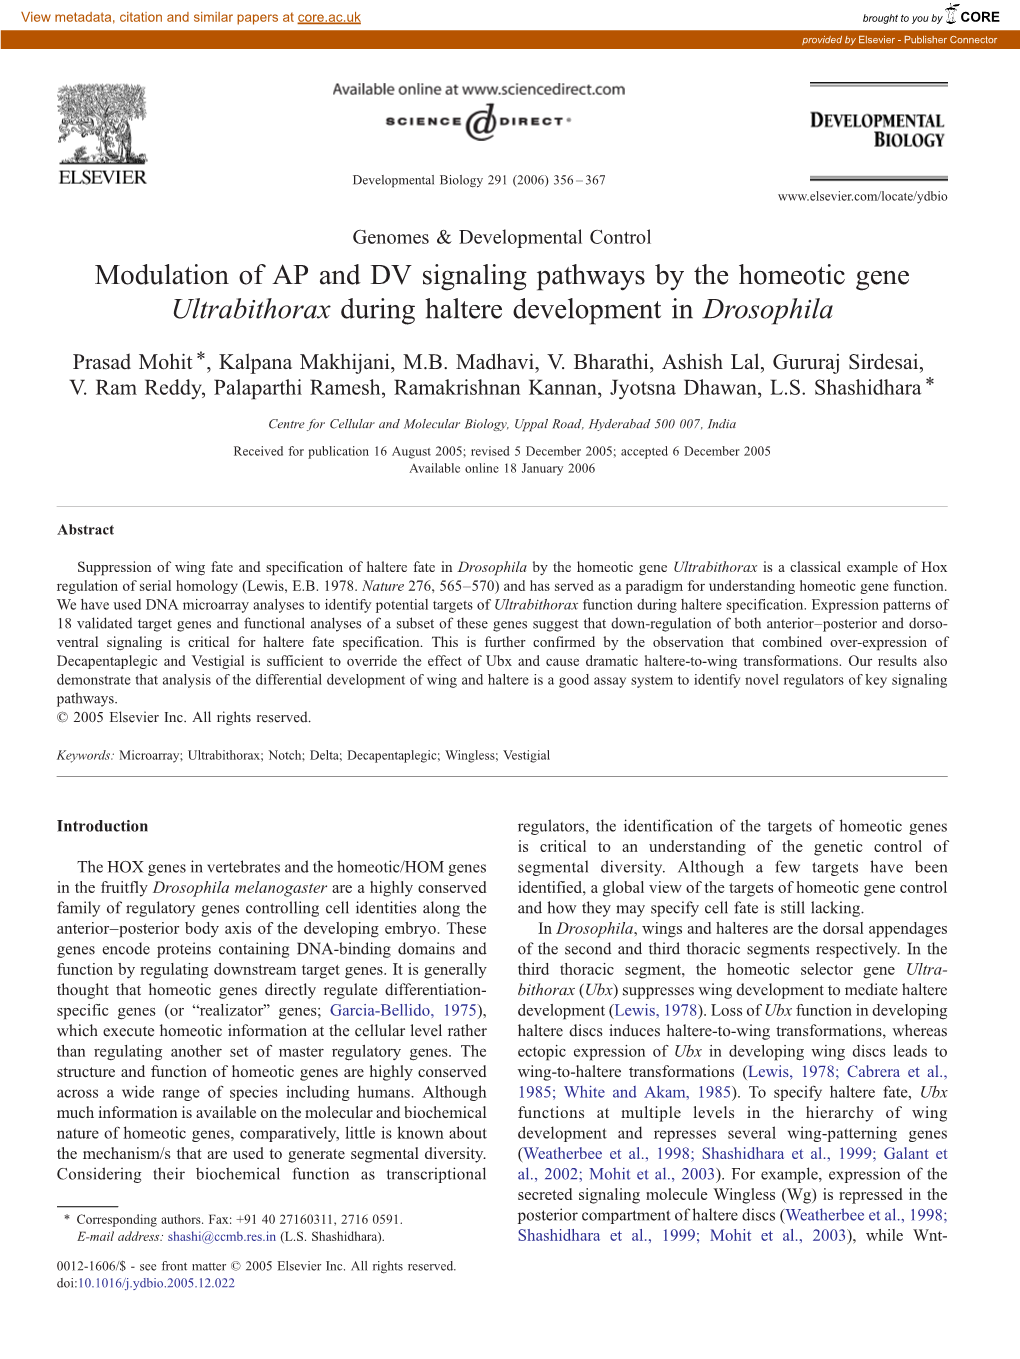 Modulation of AP and DV Signaling Pathways by the Homeotic Gene Ultrabithorax During Haltere Development in Drosophila ⁎ Prasad Mohit , Kalpana Makhijani, M.B